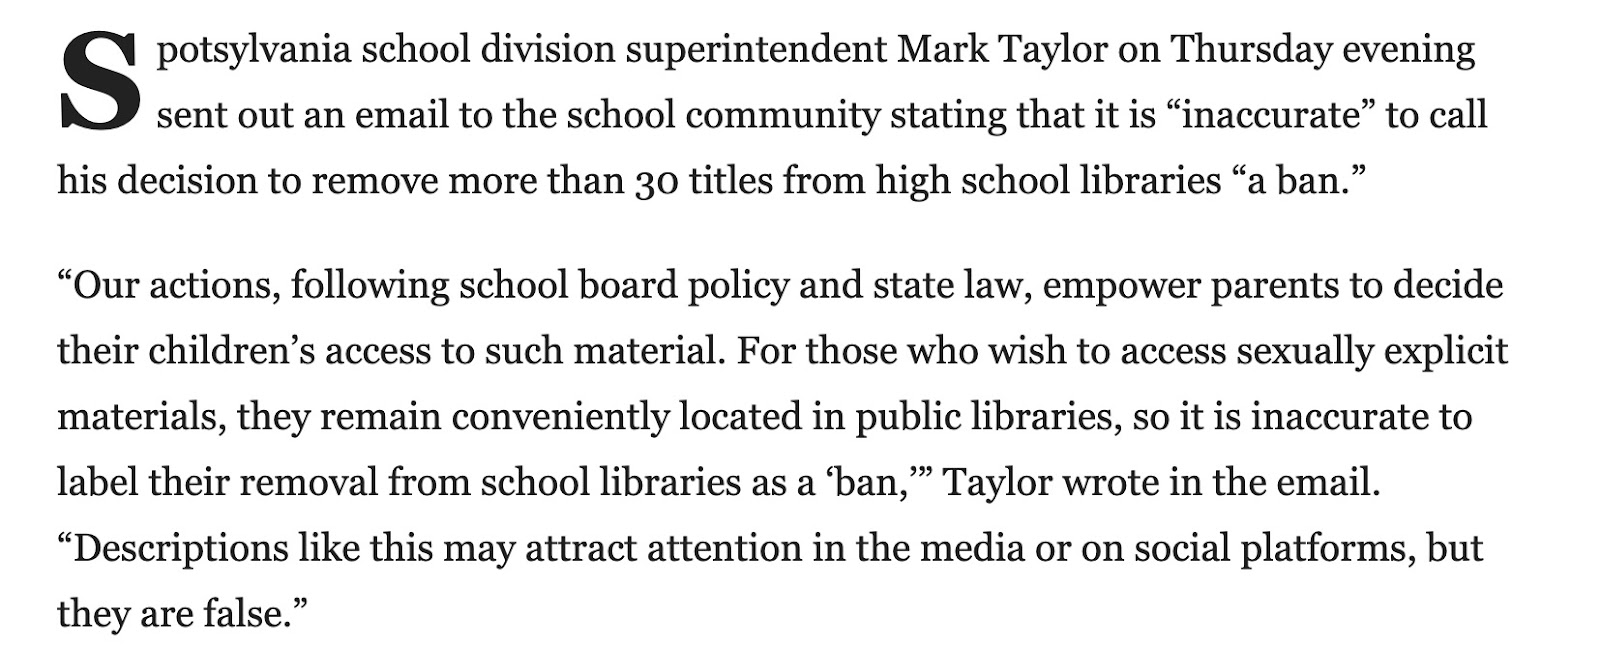 Screen shot from article: https://fredericksburg.com/news/local/education/spotsylvania-superintendent-school-division-is-not-banning-books/article_e4189a0e-74e1-11ee-b4fe-47ac9a4bdec6.html